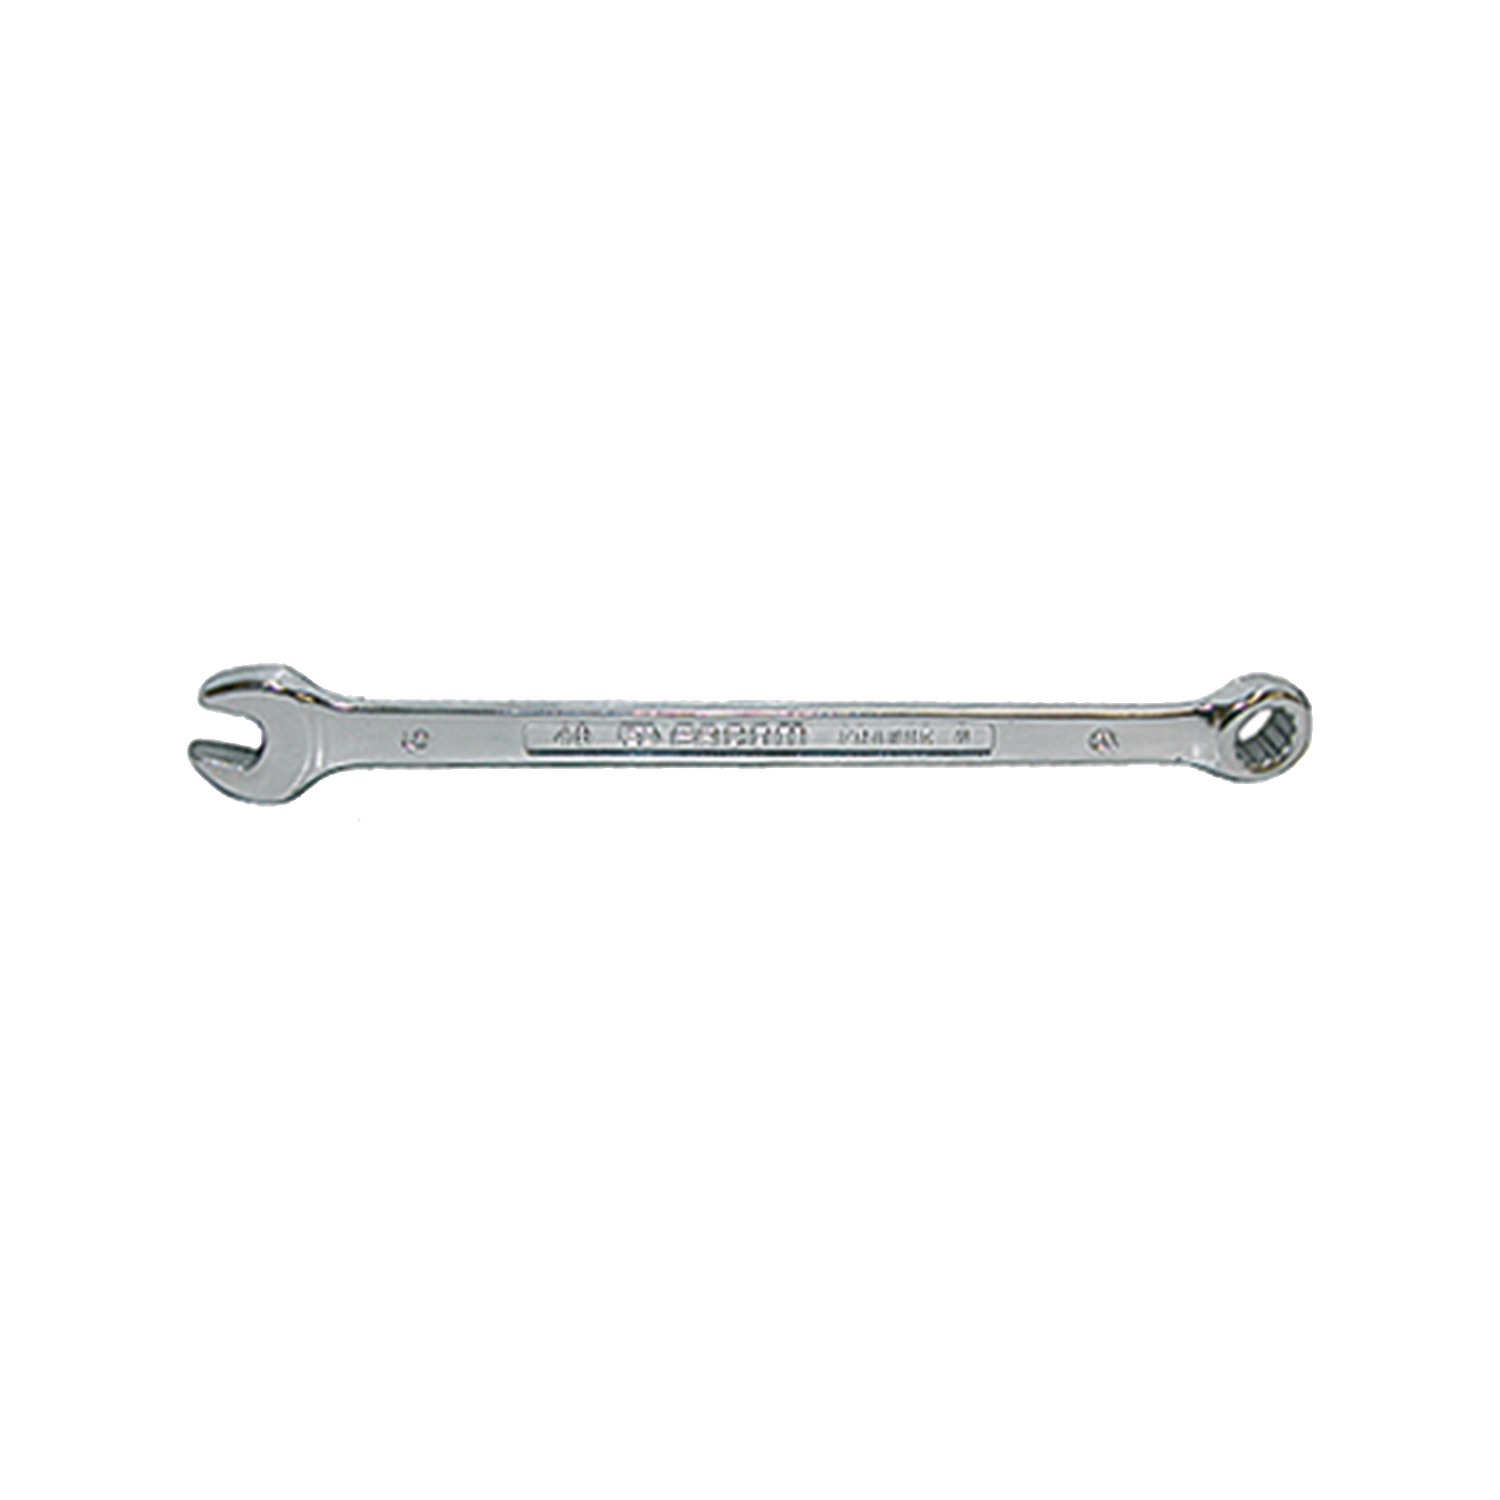 STROXX Ringsteeksleutel Type 440.17: Ringsteeksleutel met typeaanduiding 440.17.